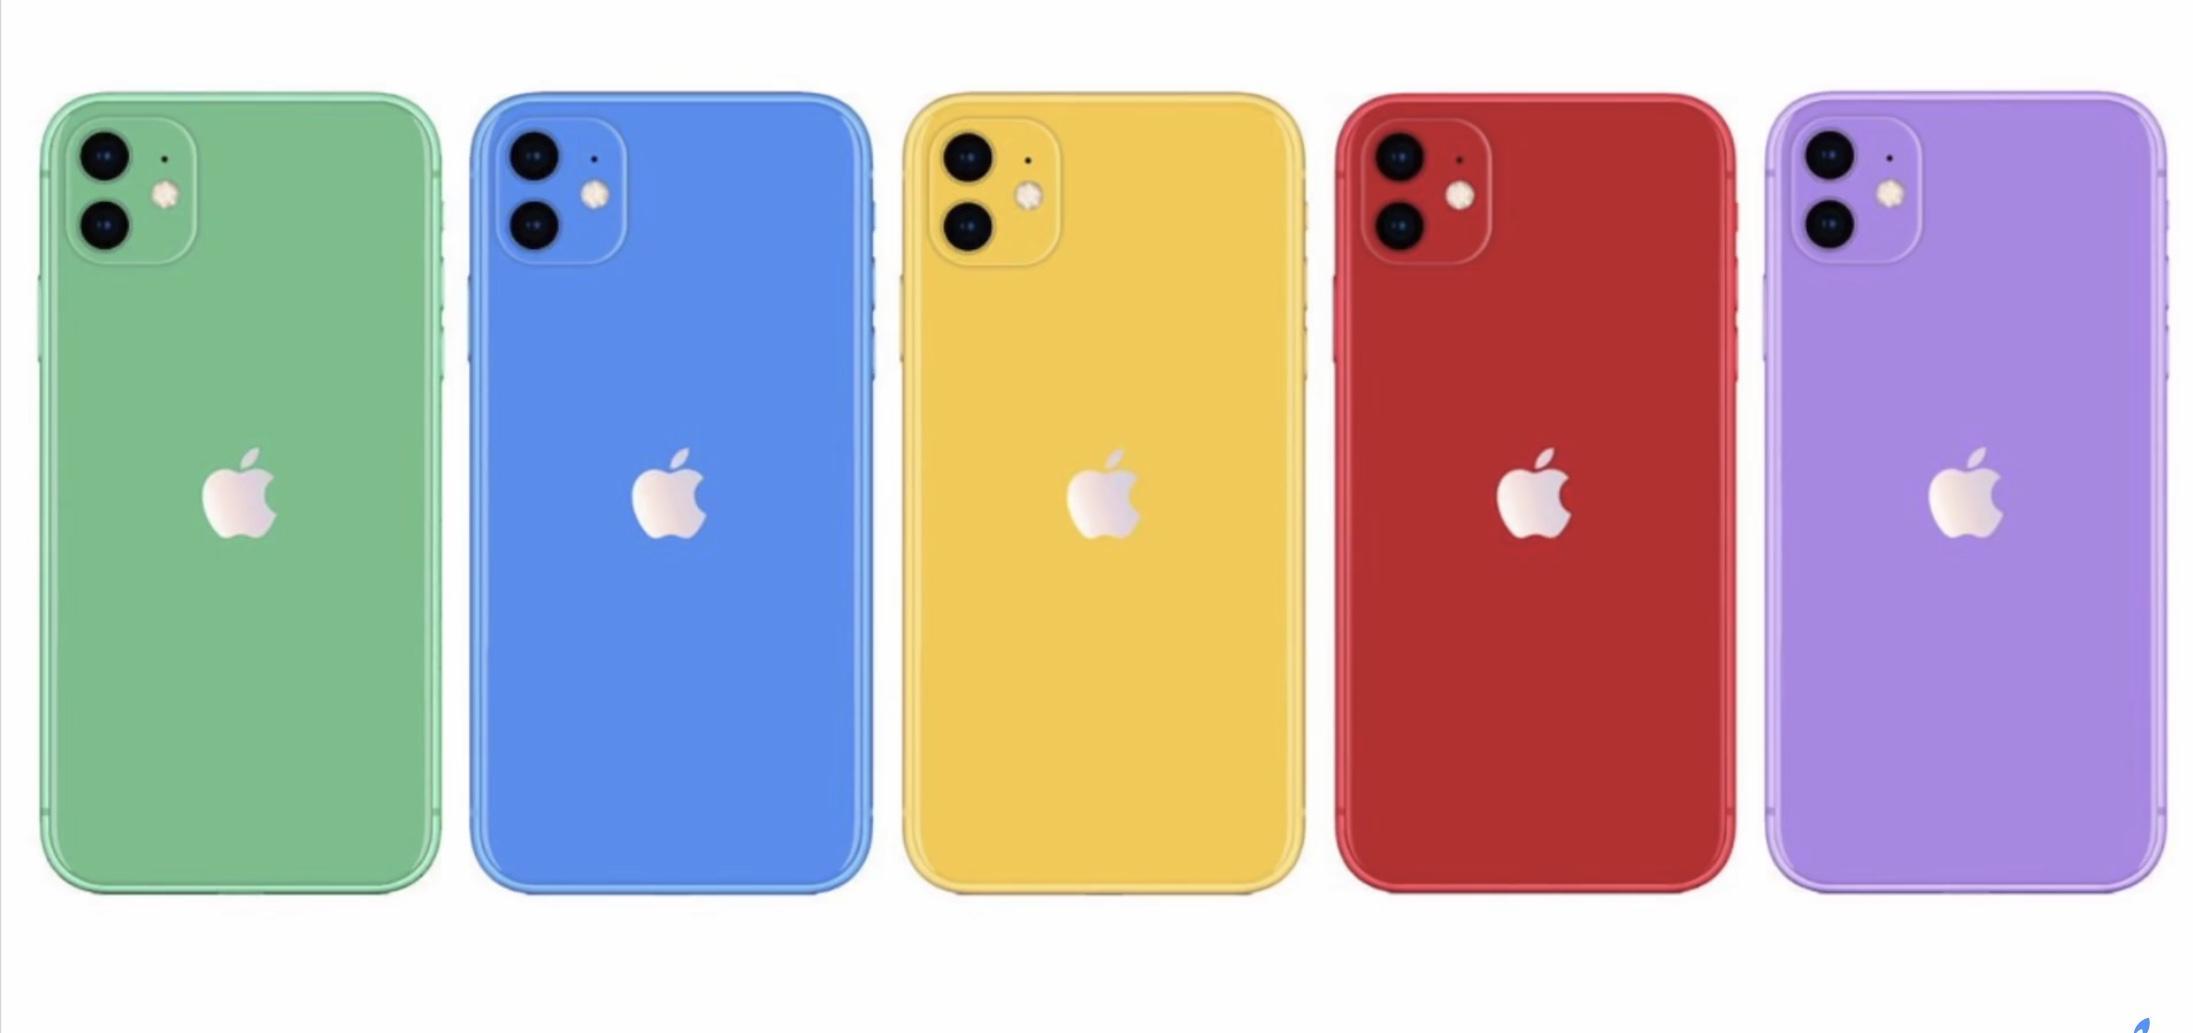 Iphone pro colors. Iphone 13 Pro Max. Айфон 14 Промакс цвета. Iphone 11r. Iphone 11 Pro Max распечатка.